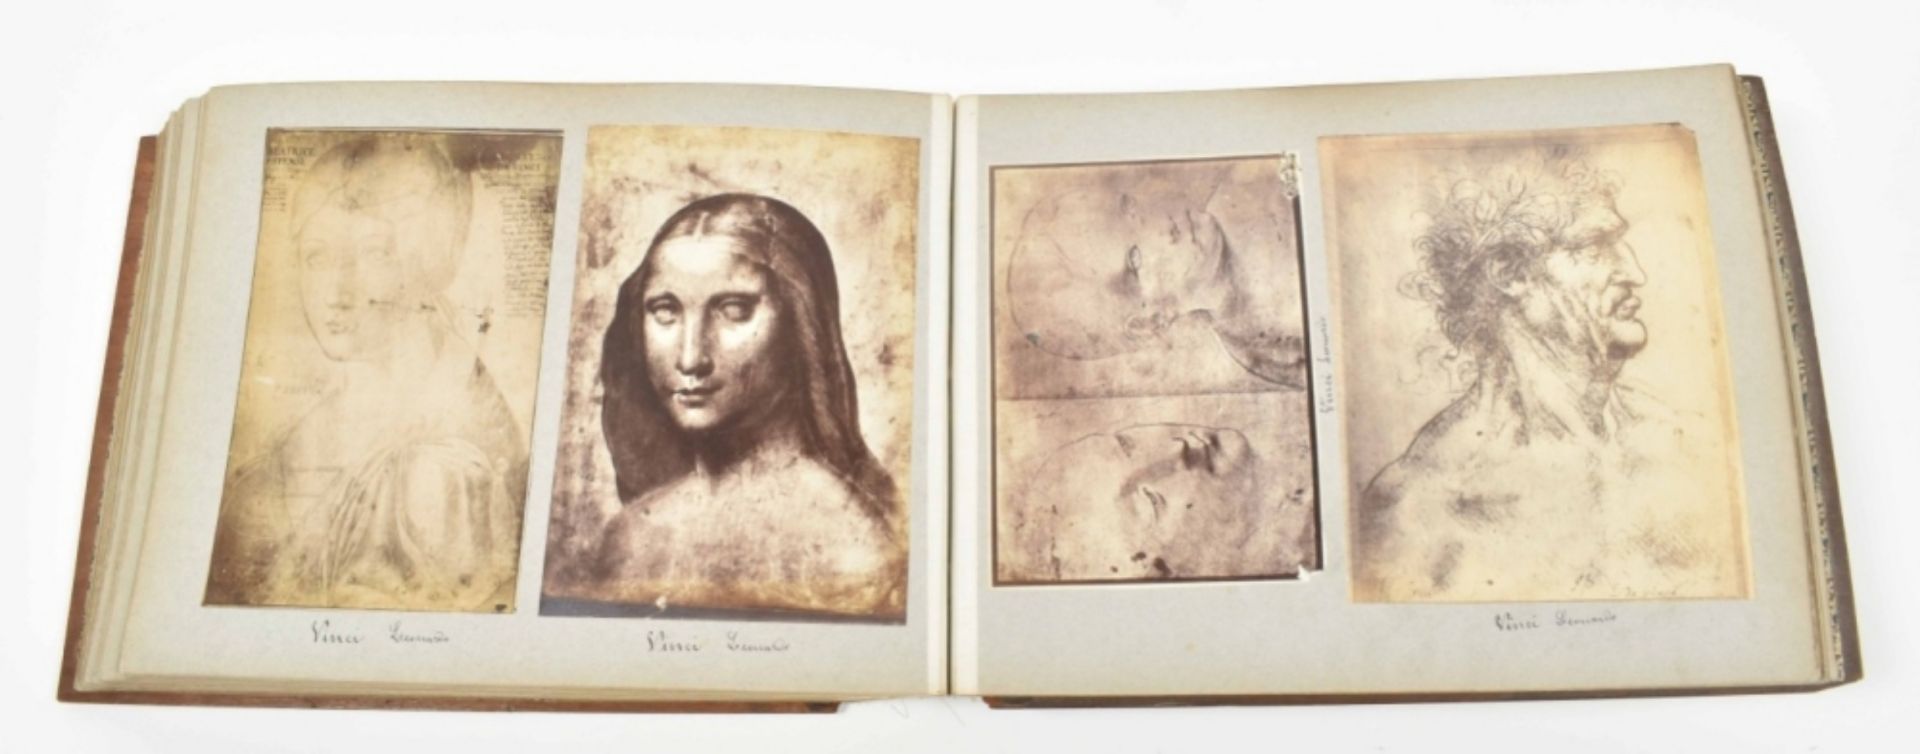 136 albumen photos of Italian Renaissance masterpieces